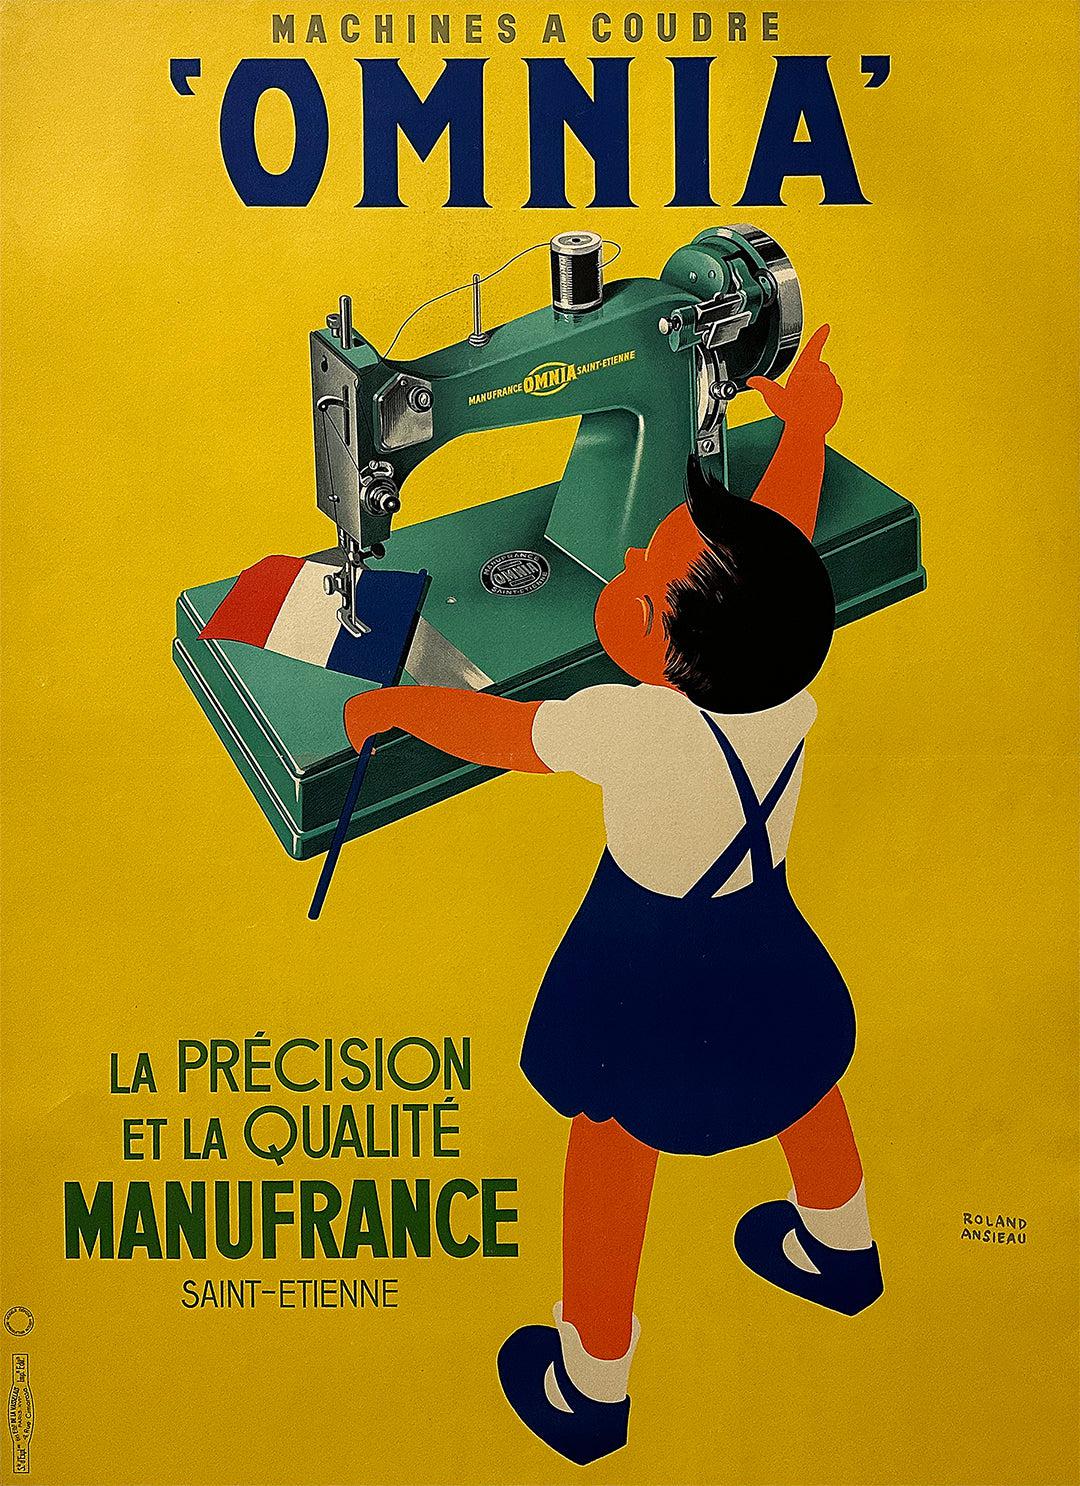 Original Vintage Omnia Sewing Machine Poster by Ansieau 1950